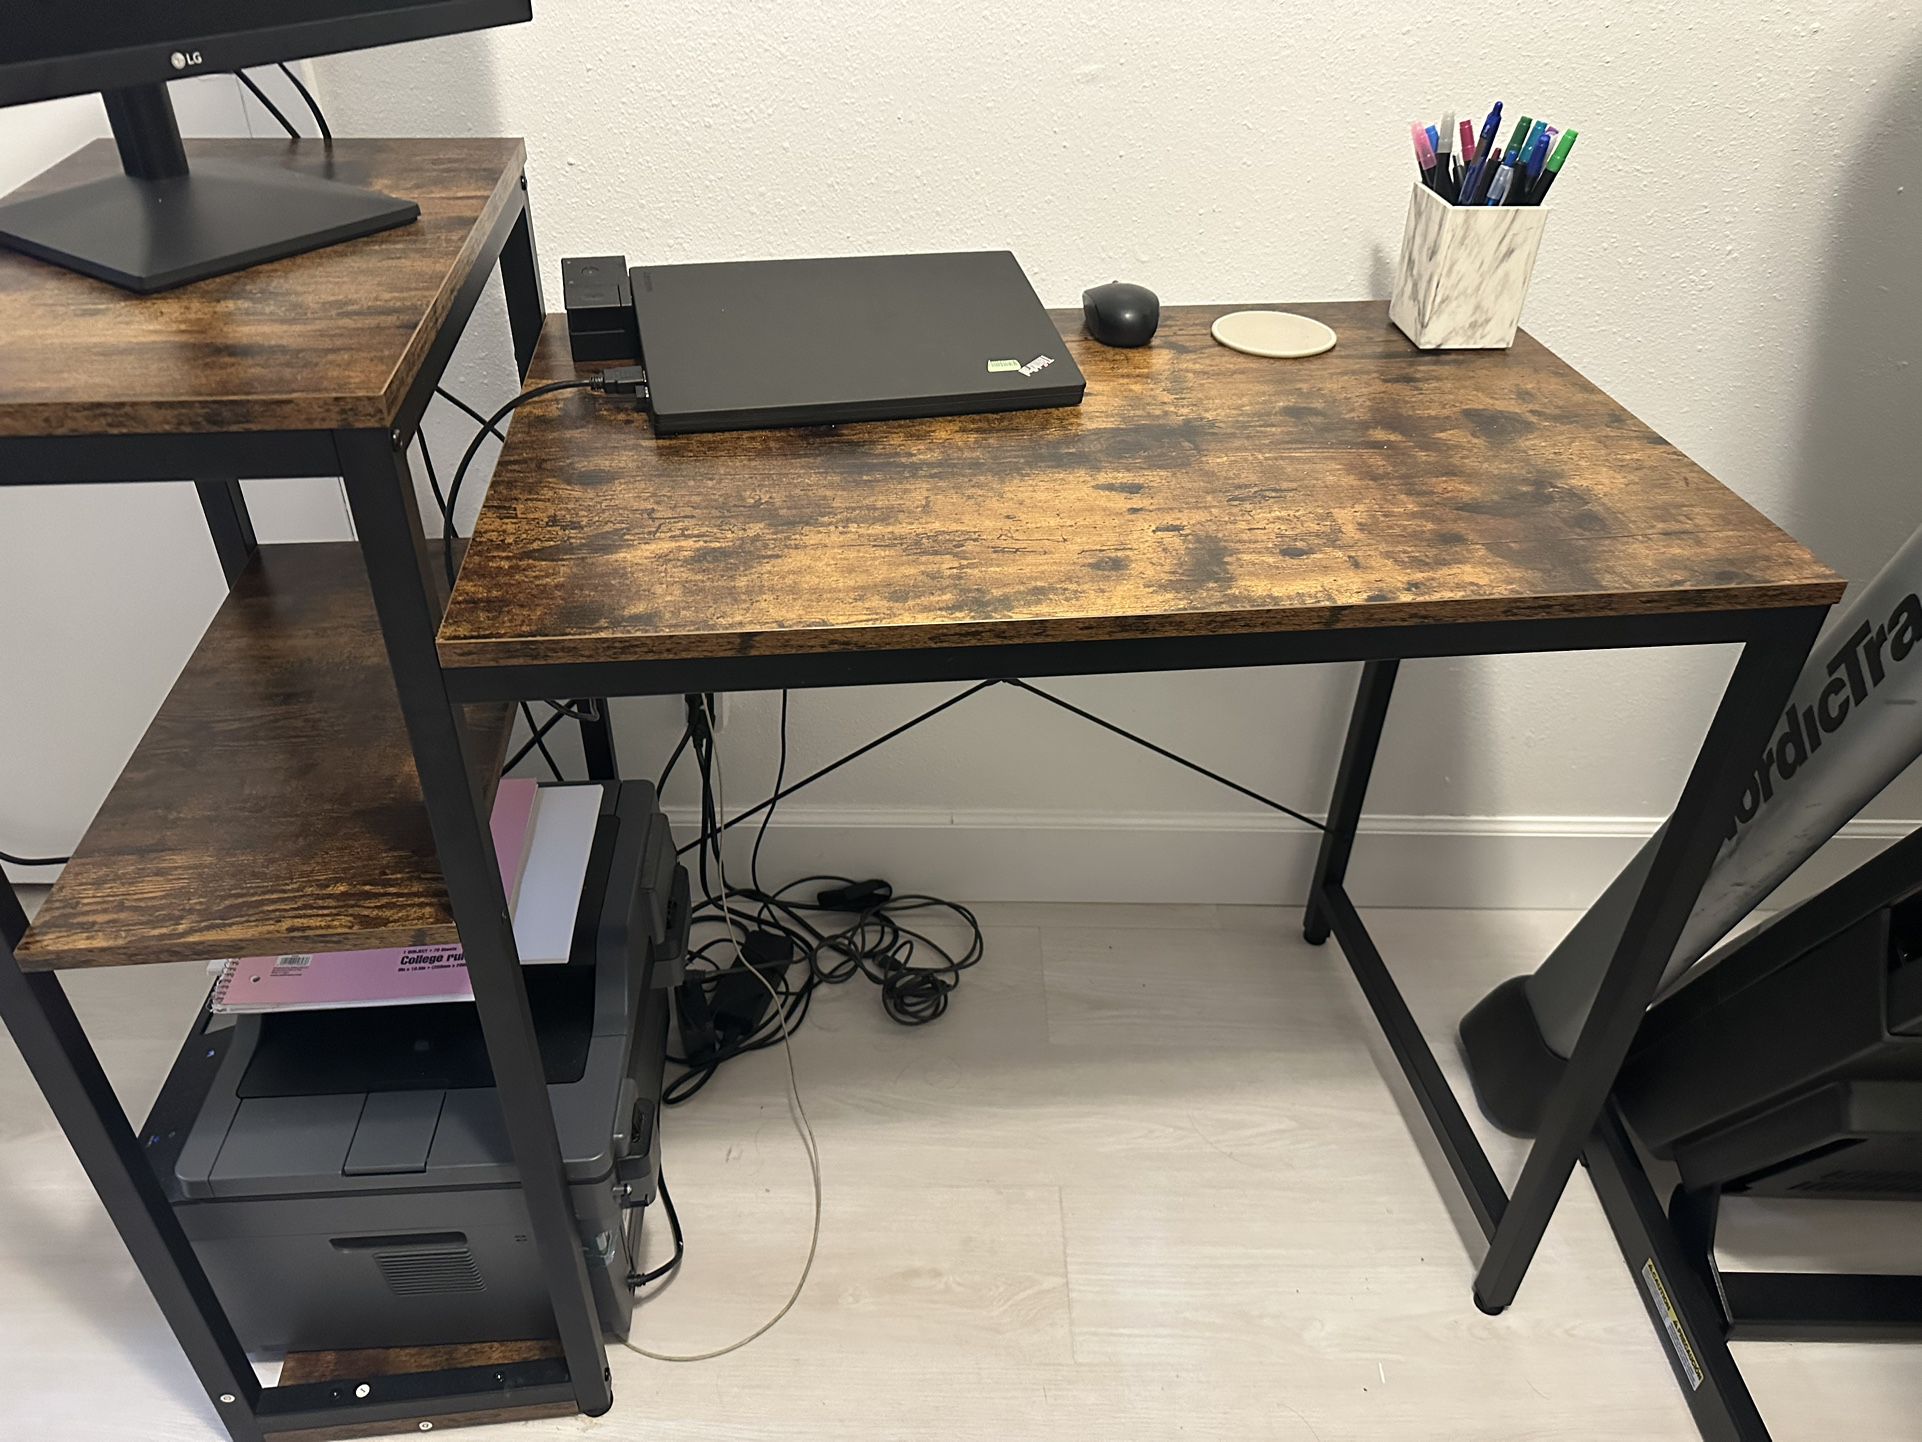 Industrial Laptop Desk with Storage Shelves